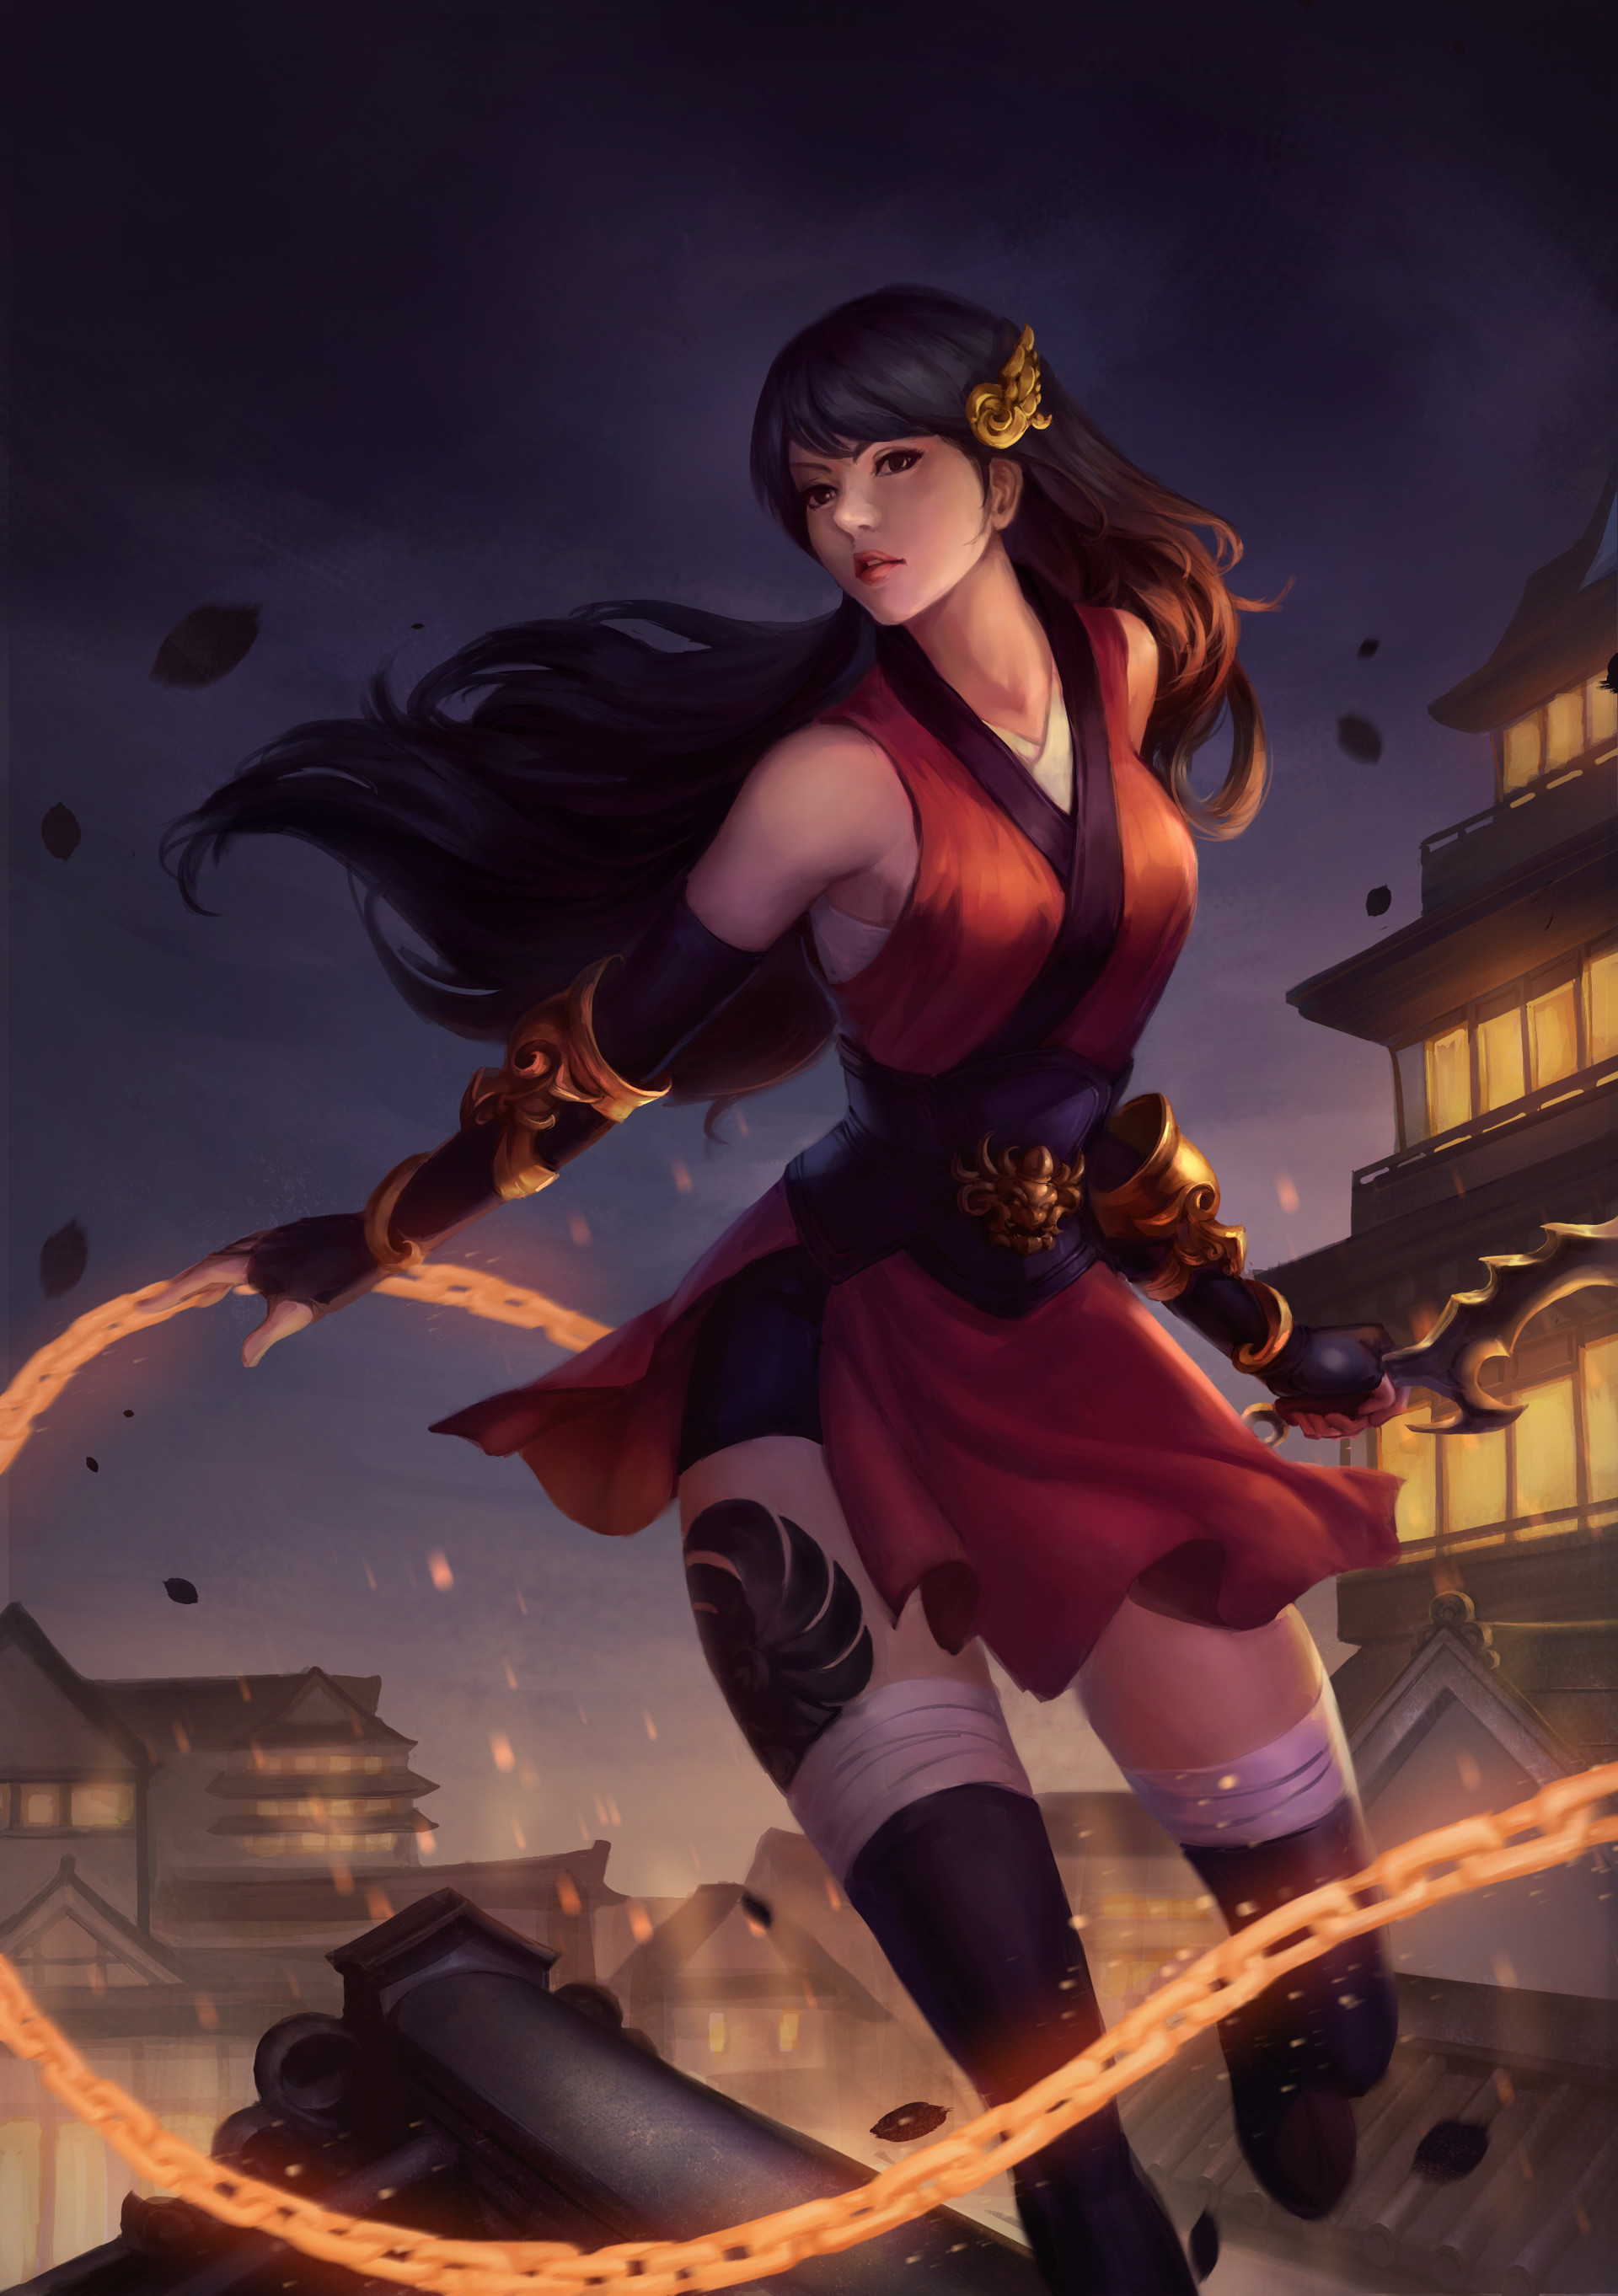 ArtStation - Ninja girl